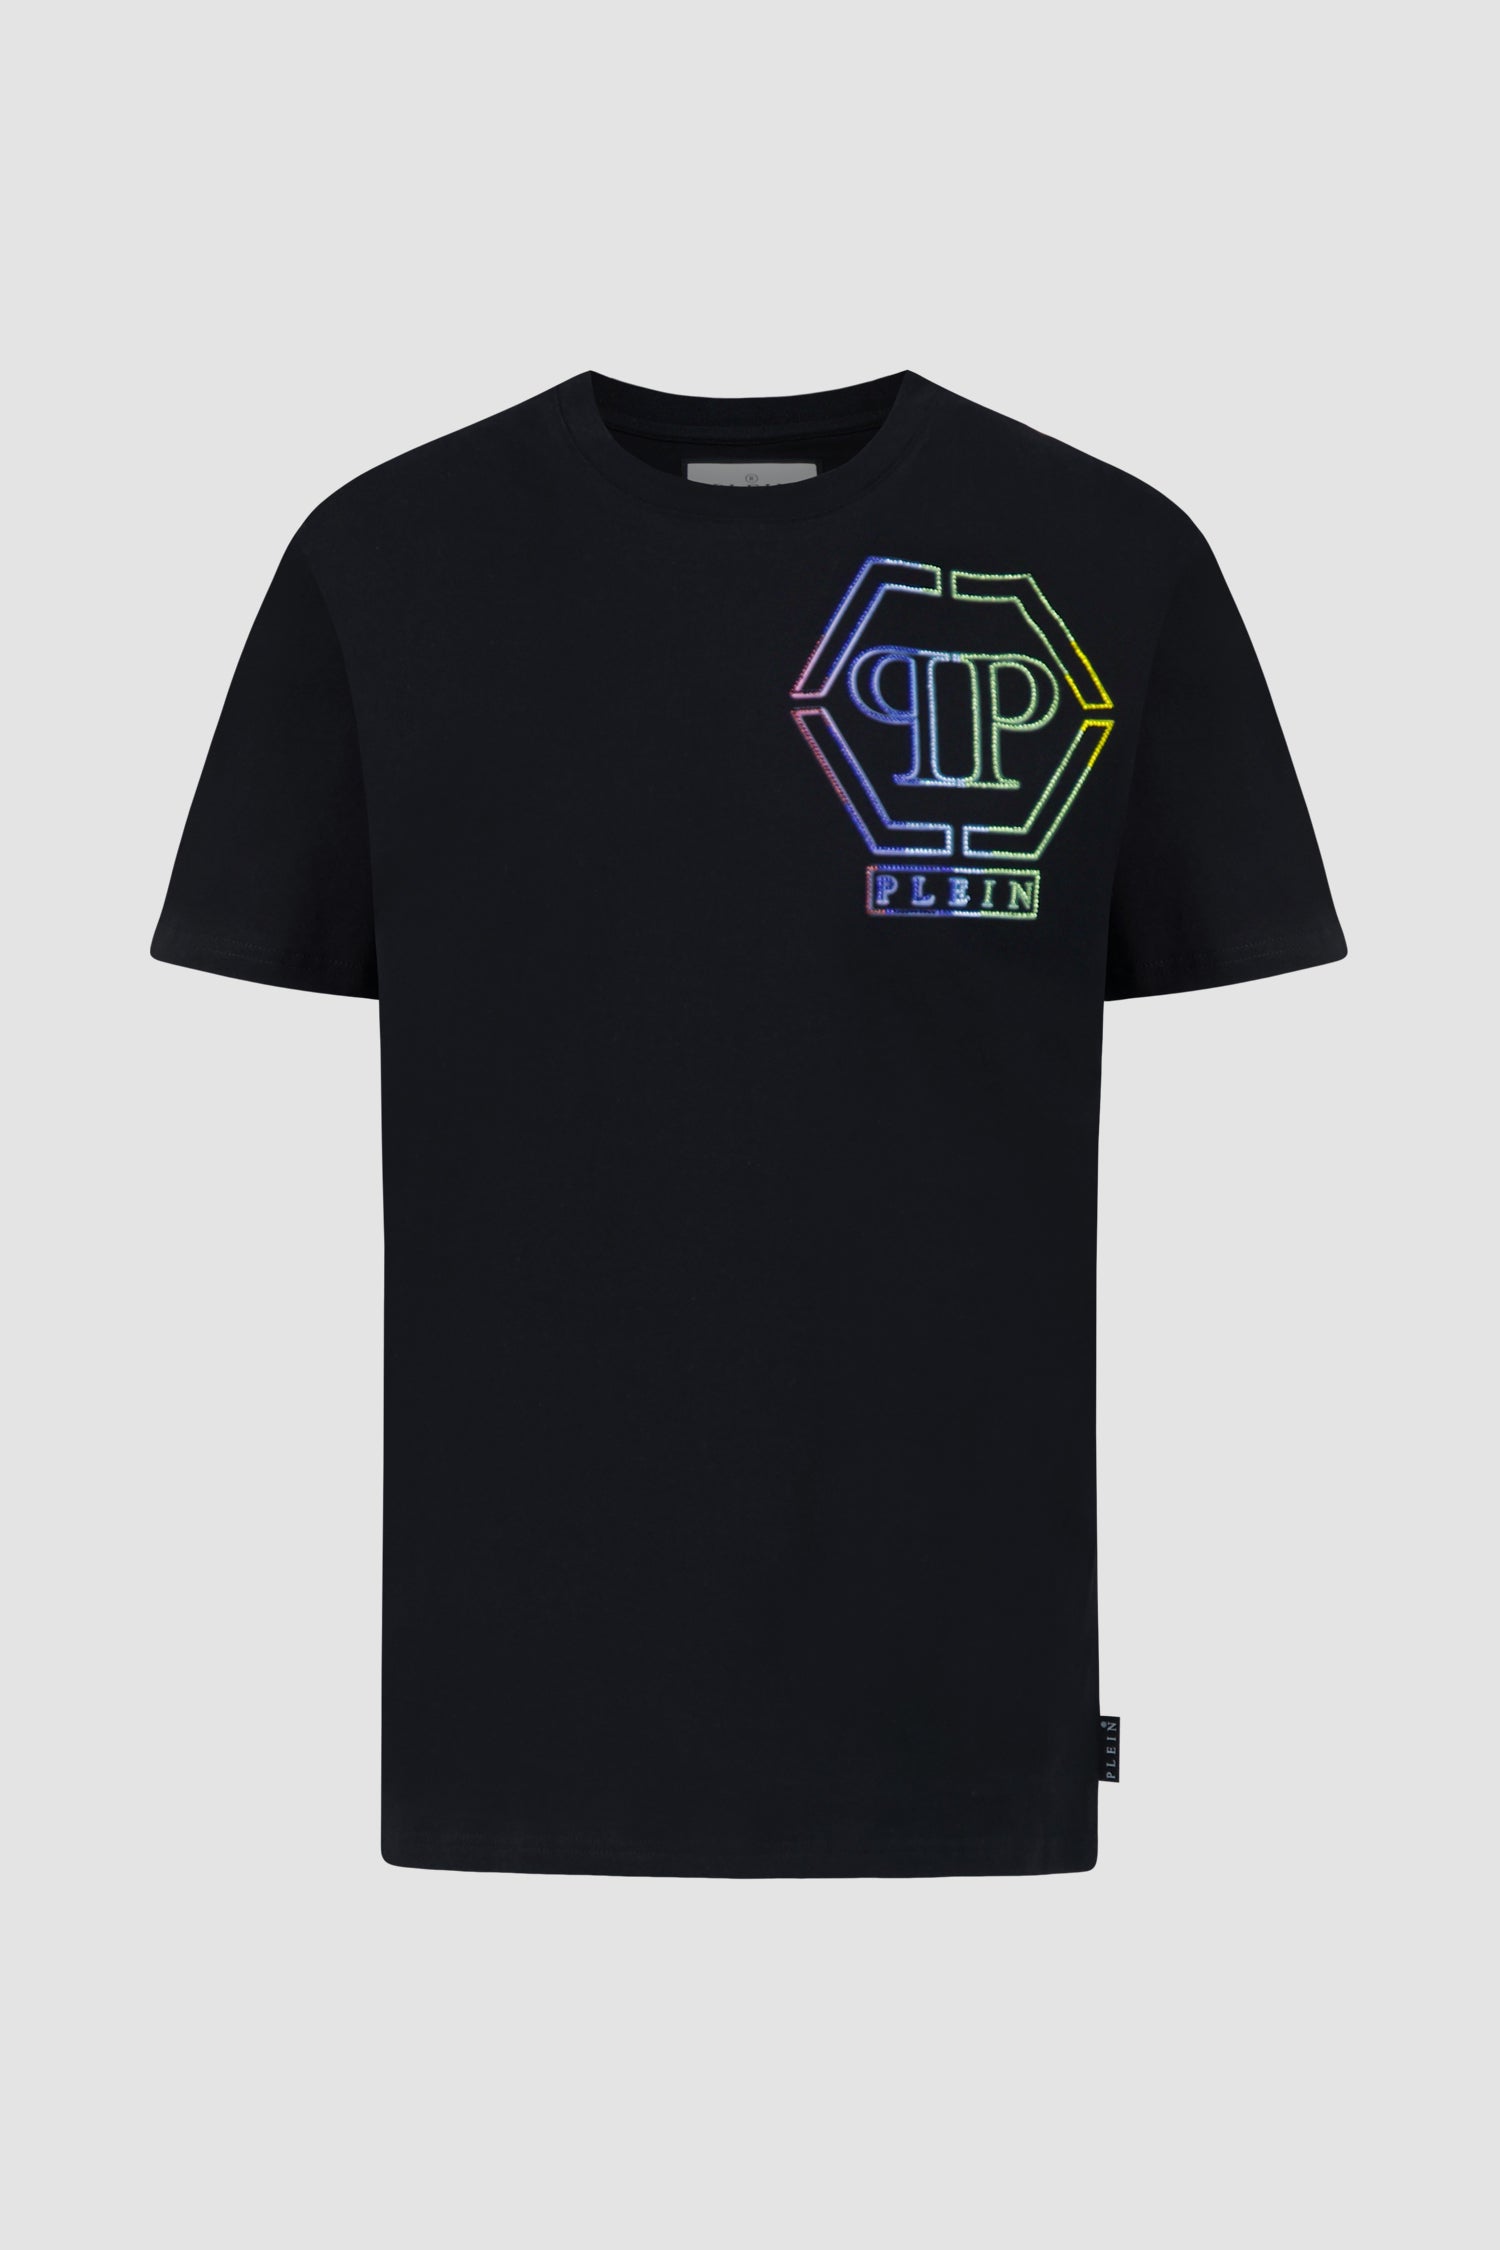 Philipp Plein Black SS T-Shirt